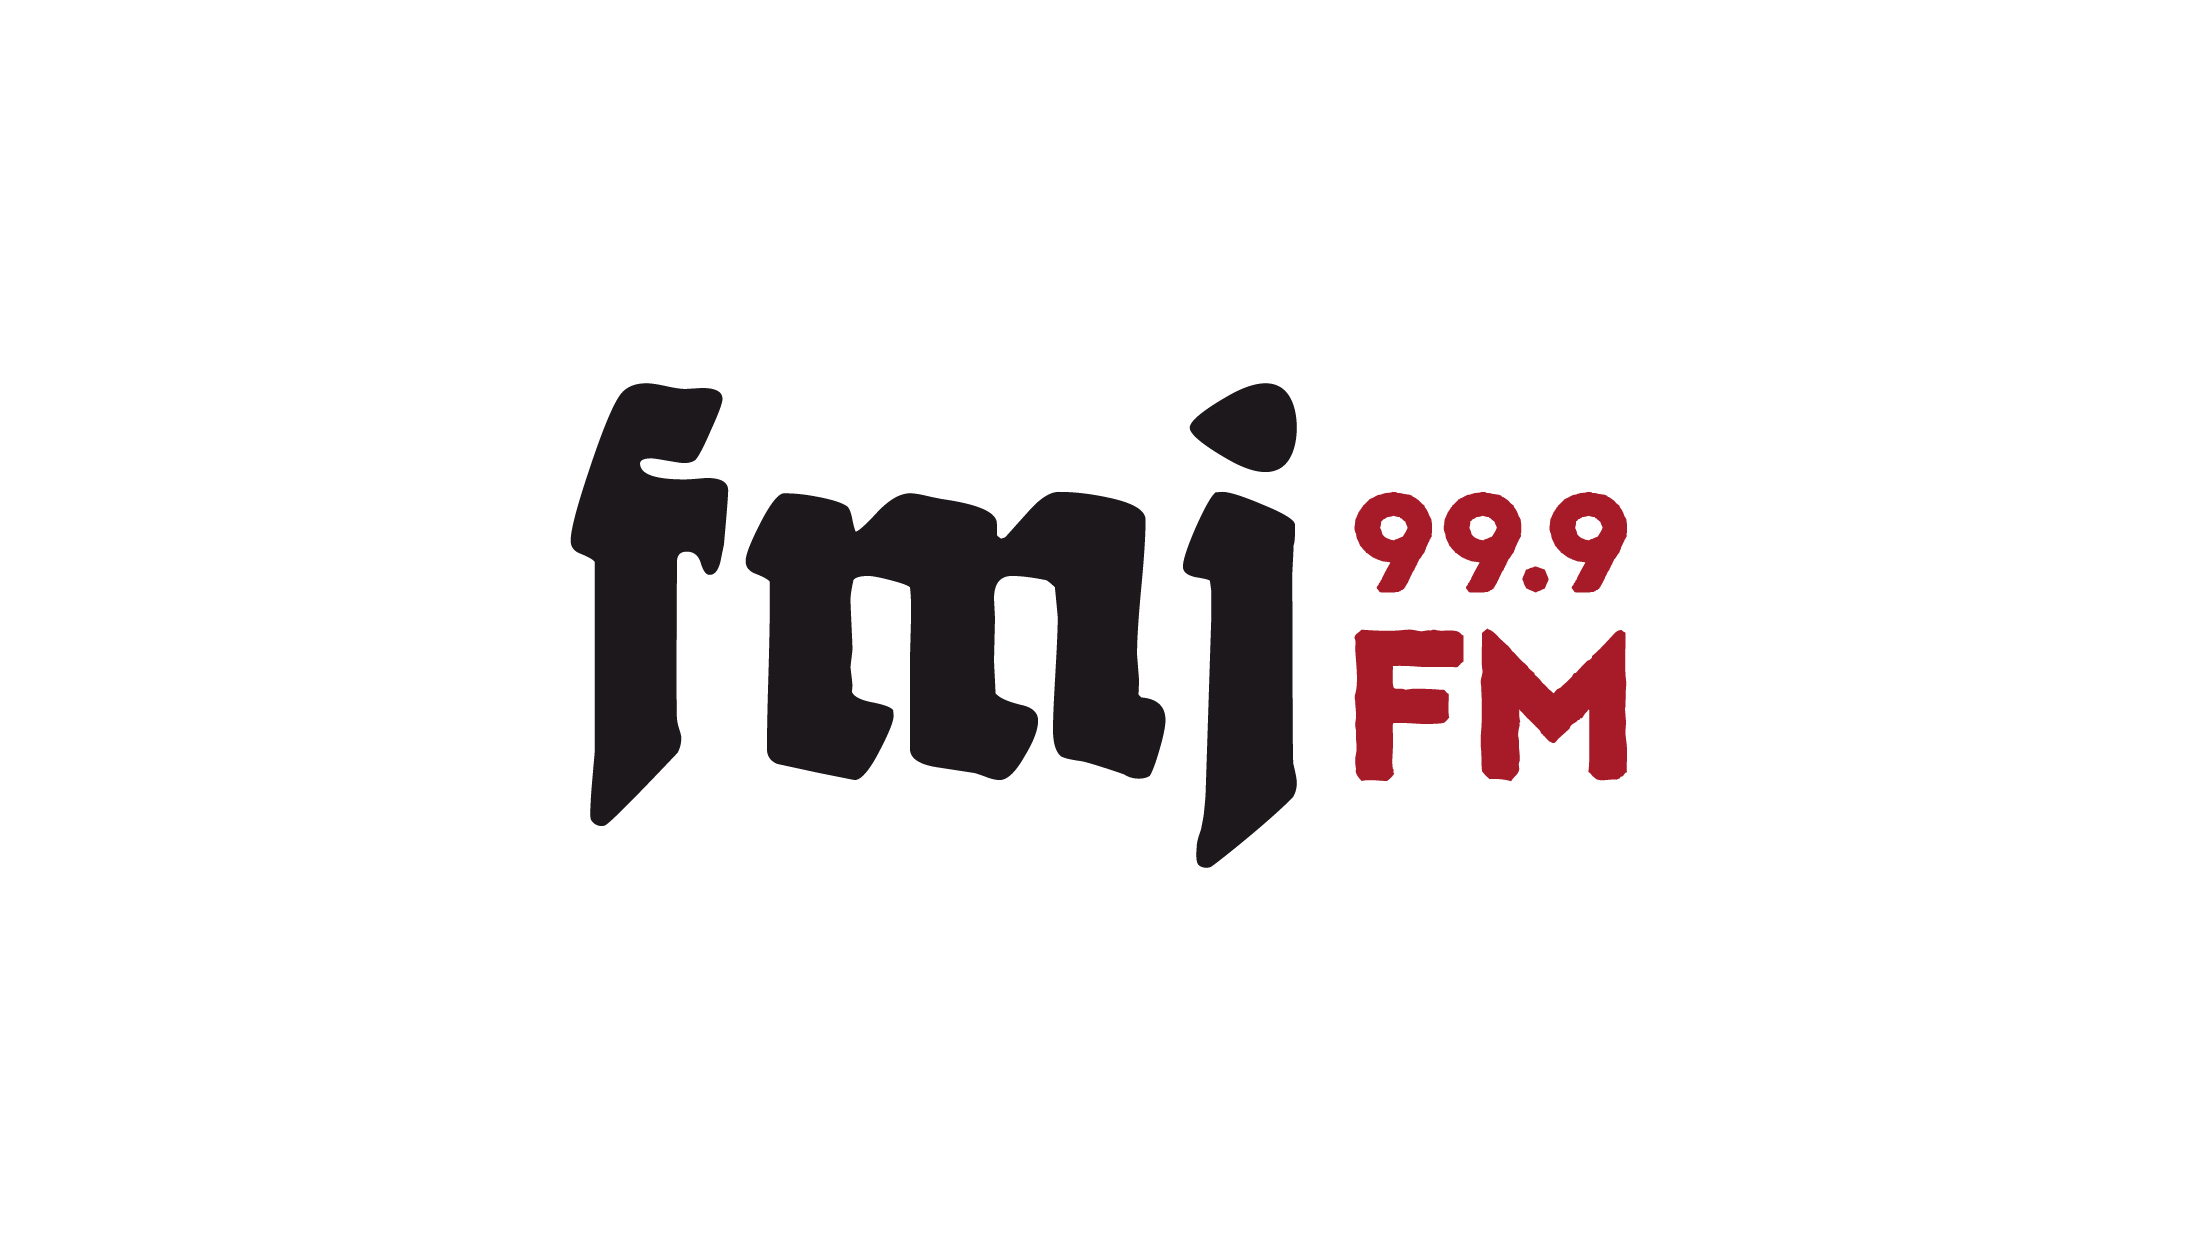 99.9 FMJ FM - Radio Station Branding 1